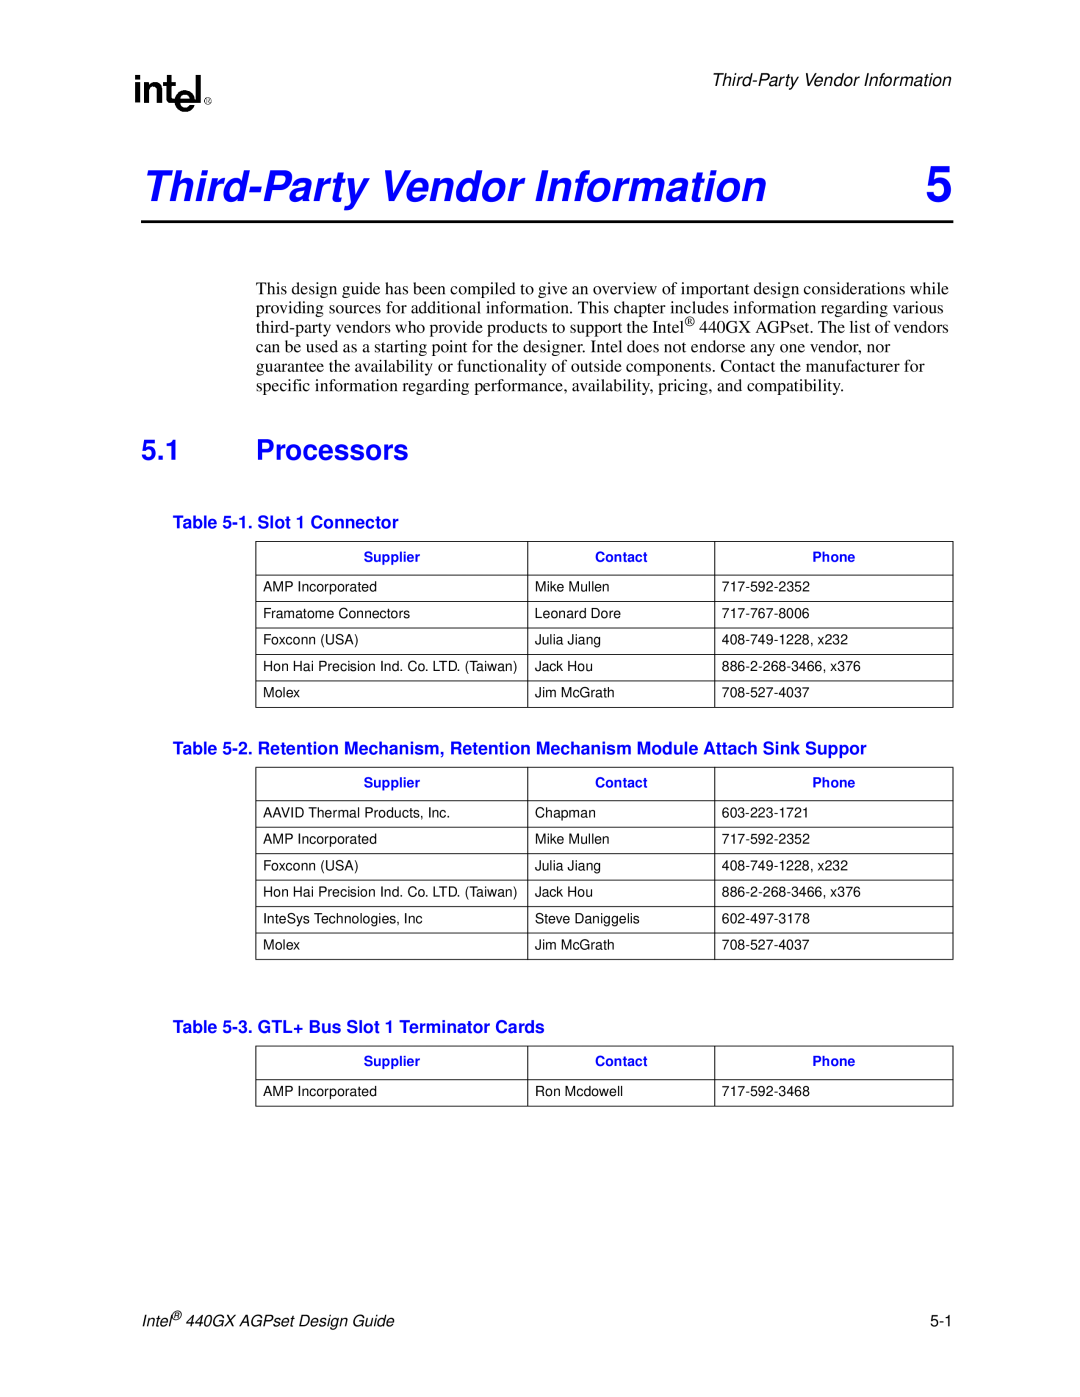 Intel 440GX manual Third-Party Vendor Information, Processors, 1. Slot 1 Connector, 3. GTL+ Bus Slot 1 Terminator Cards 